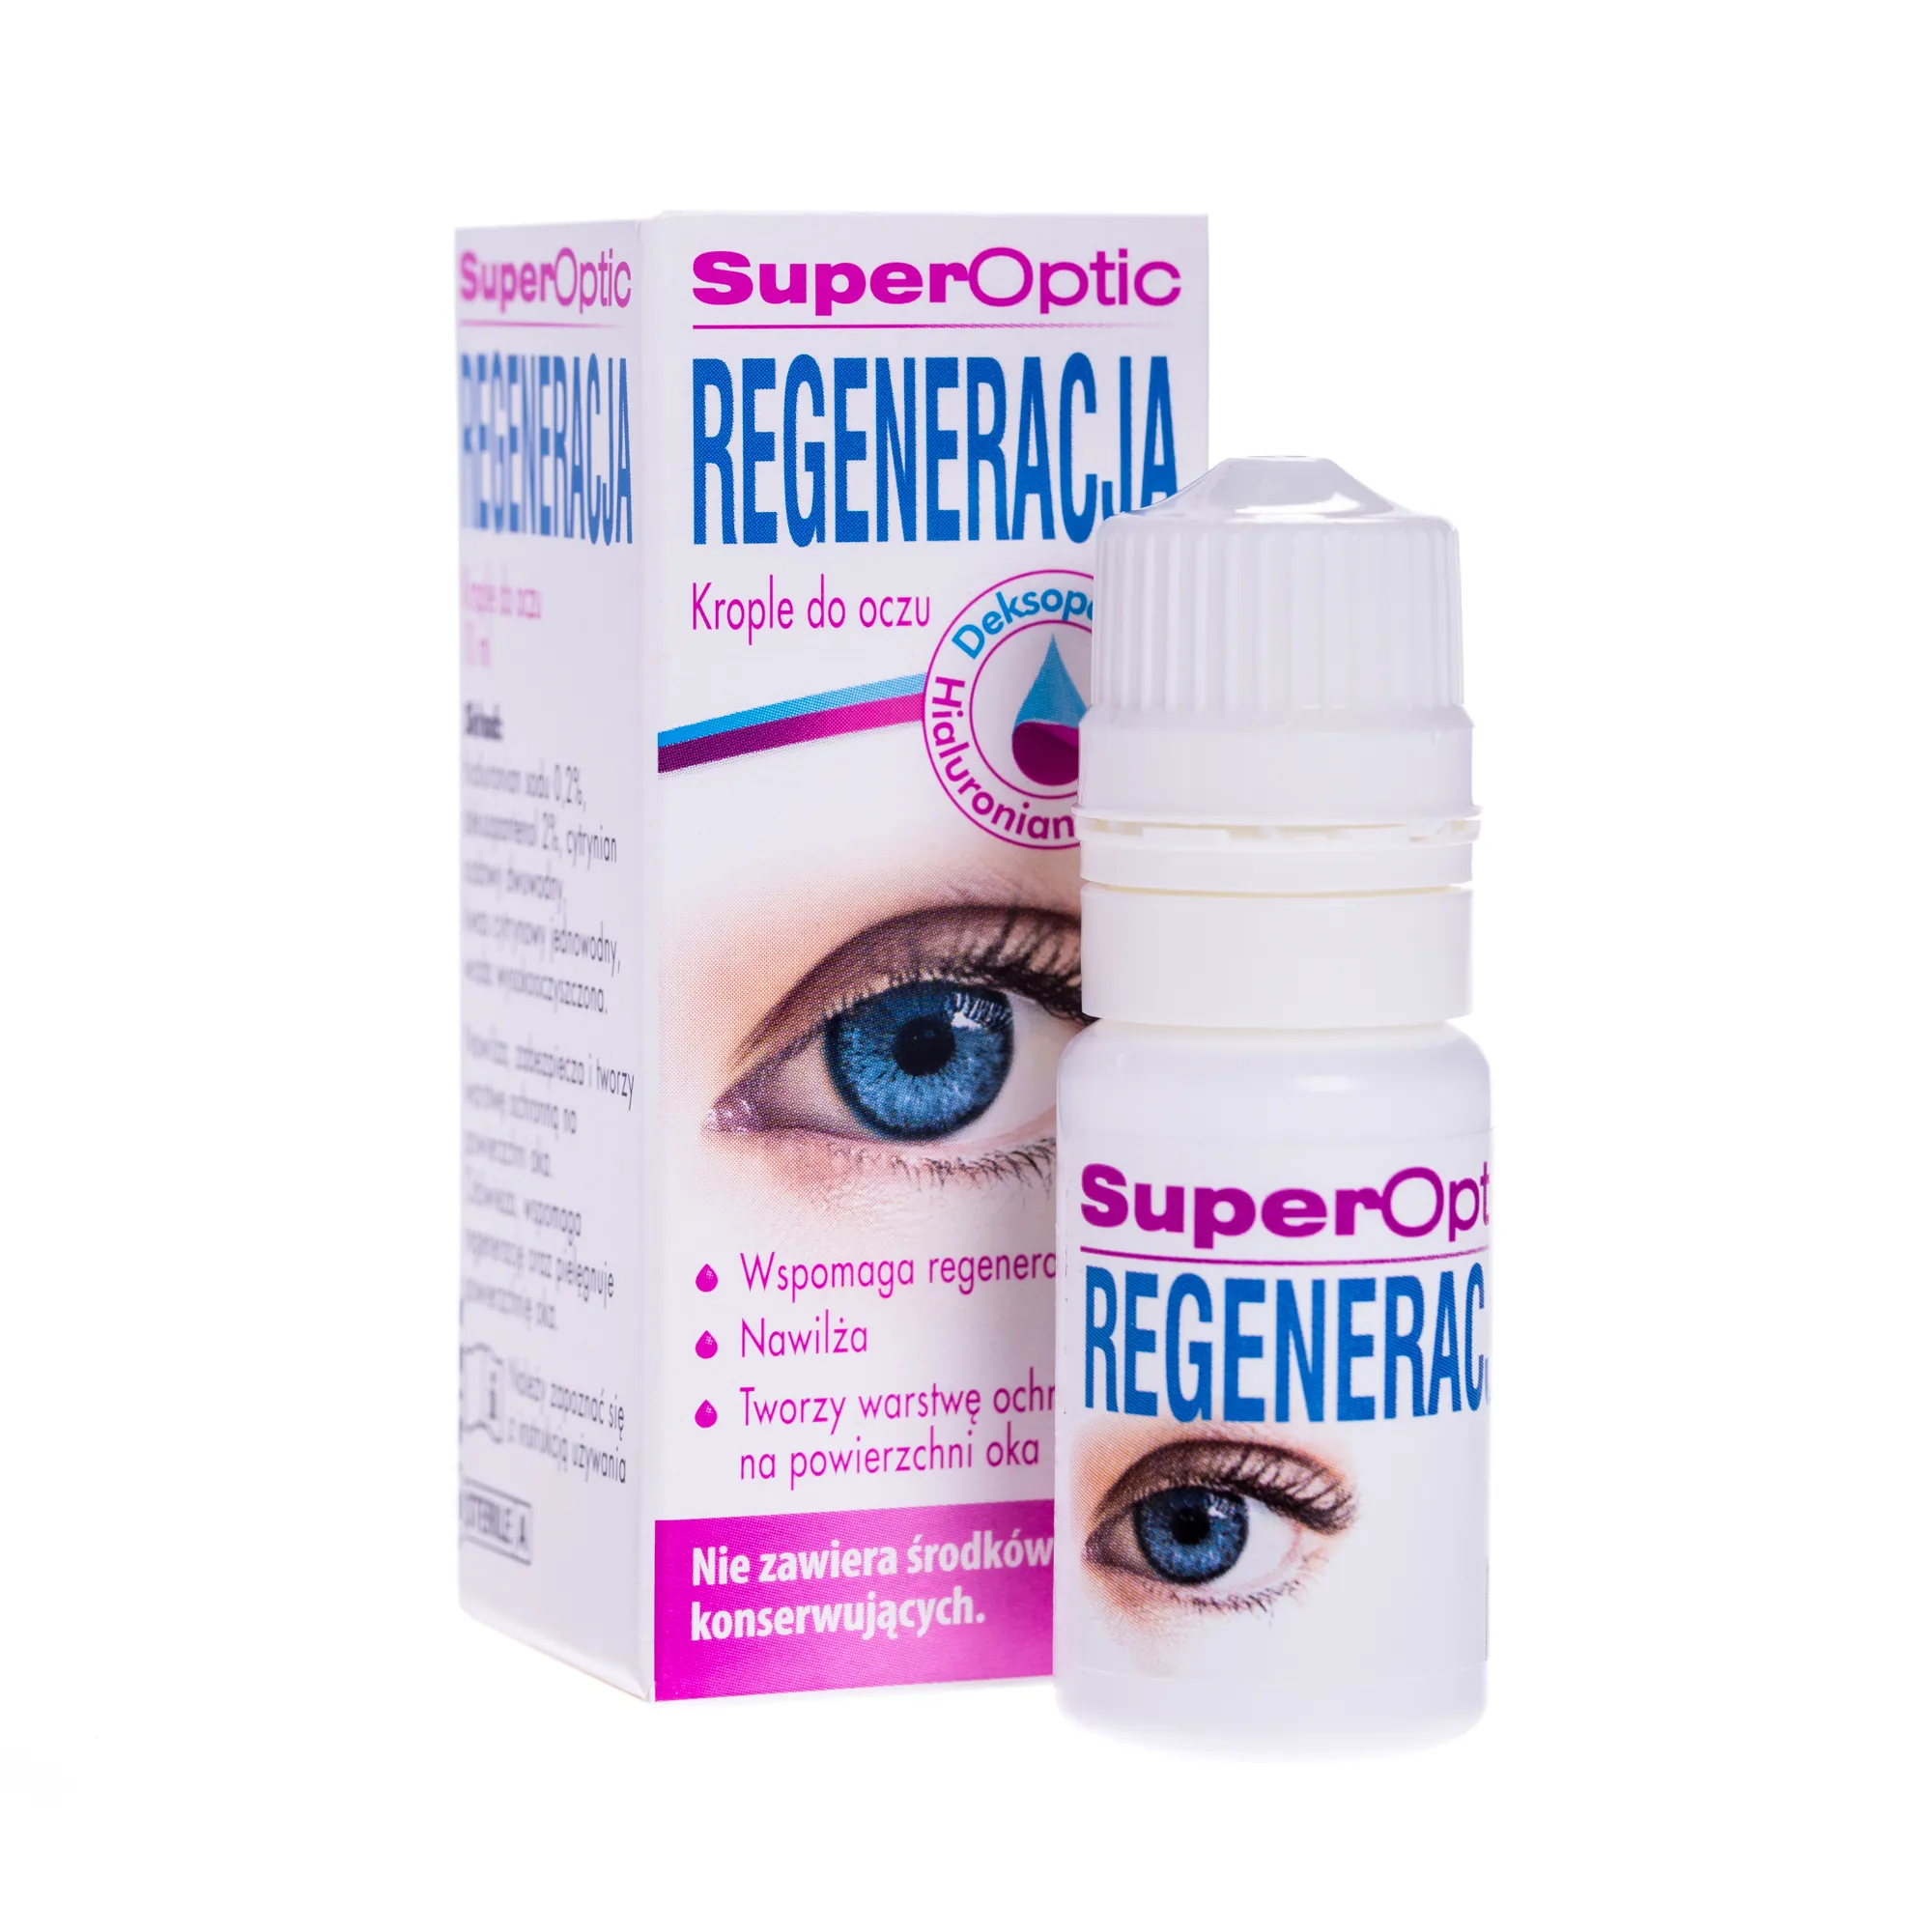 SuperOptic Regeneracja krople do oczu, 10 ml